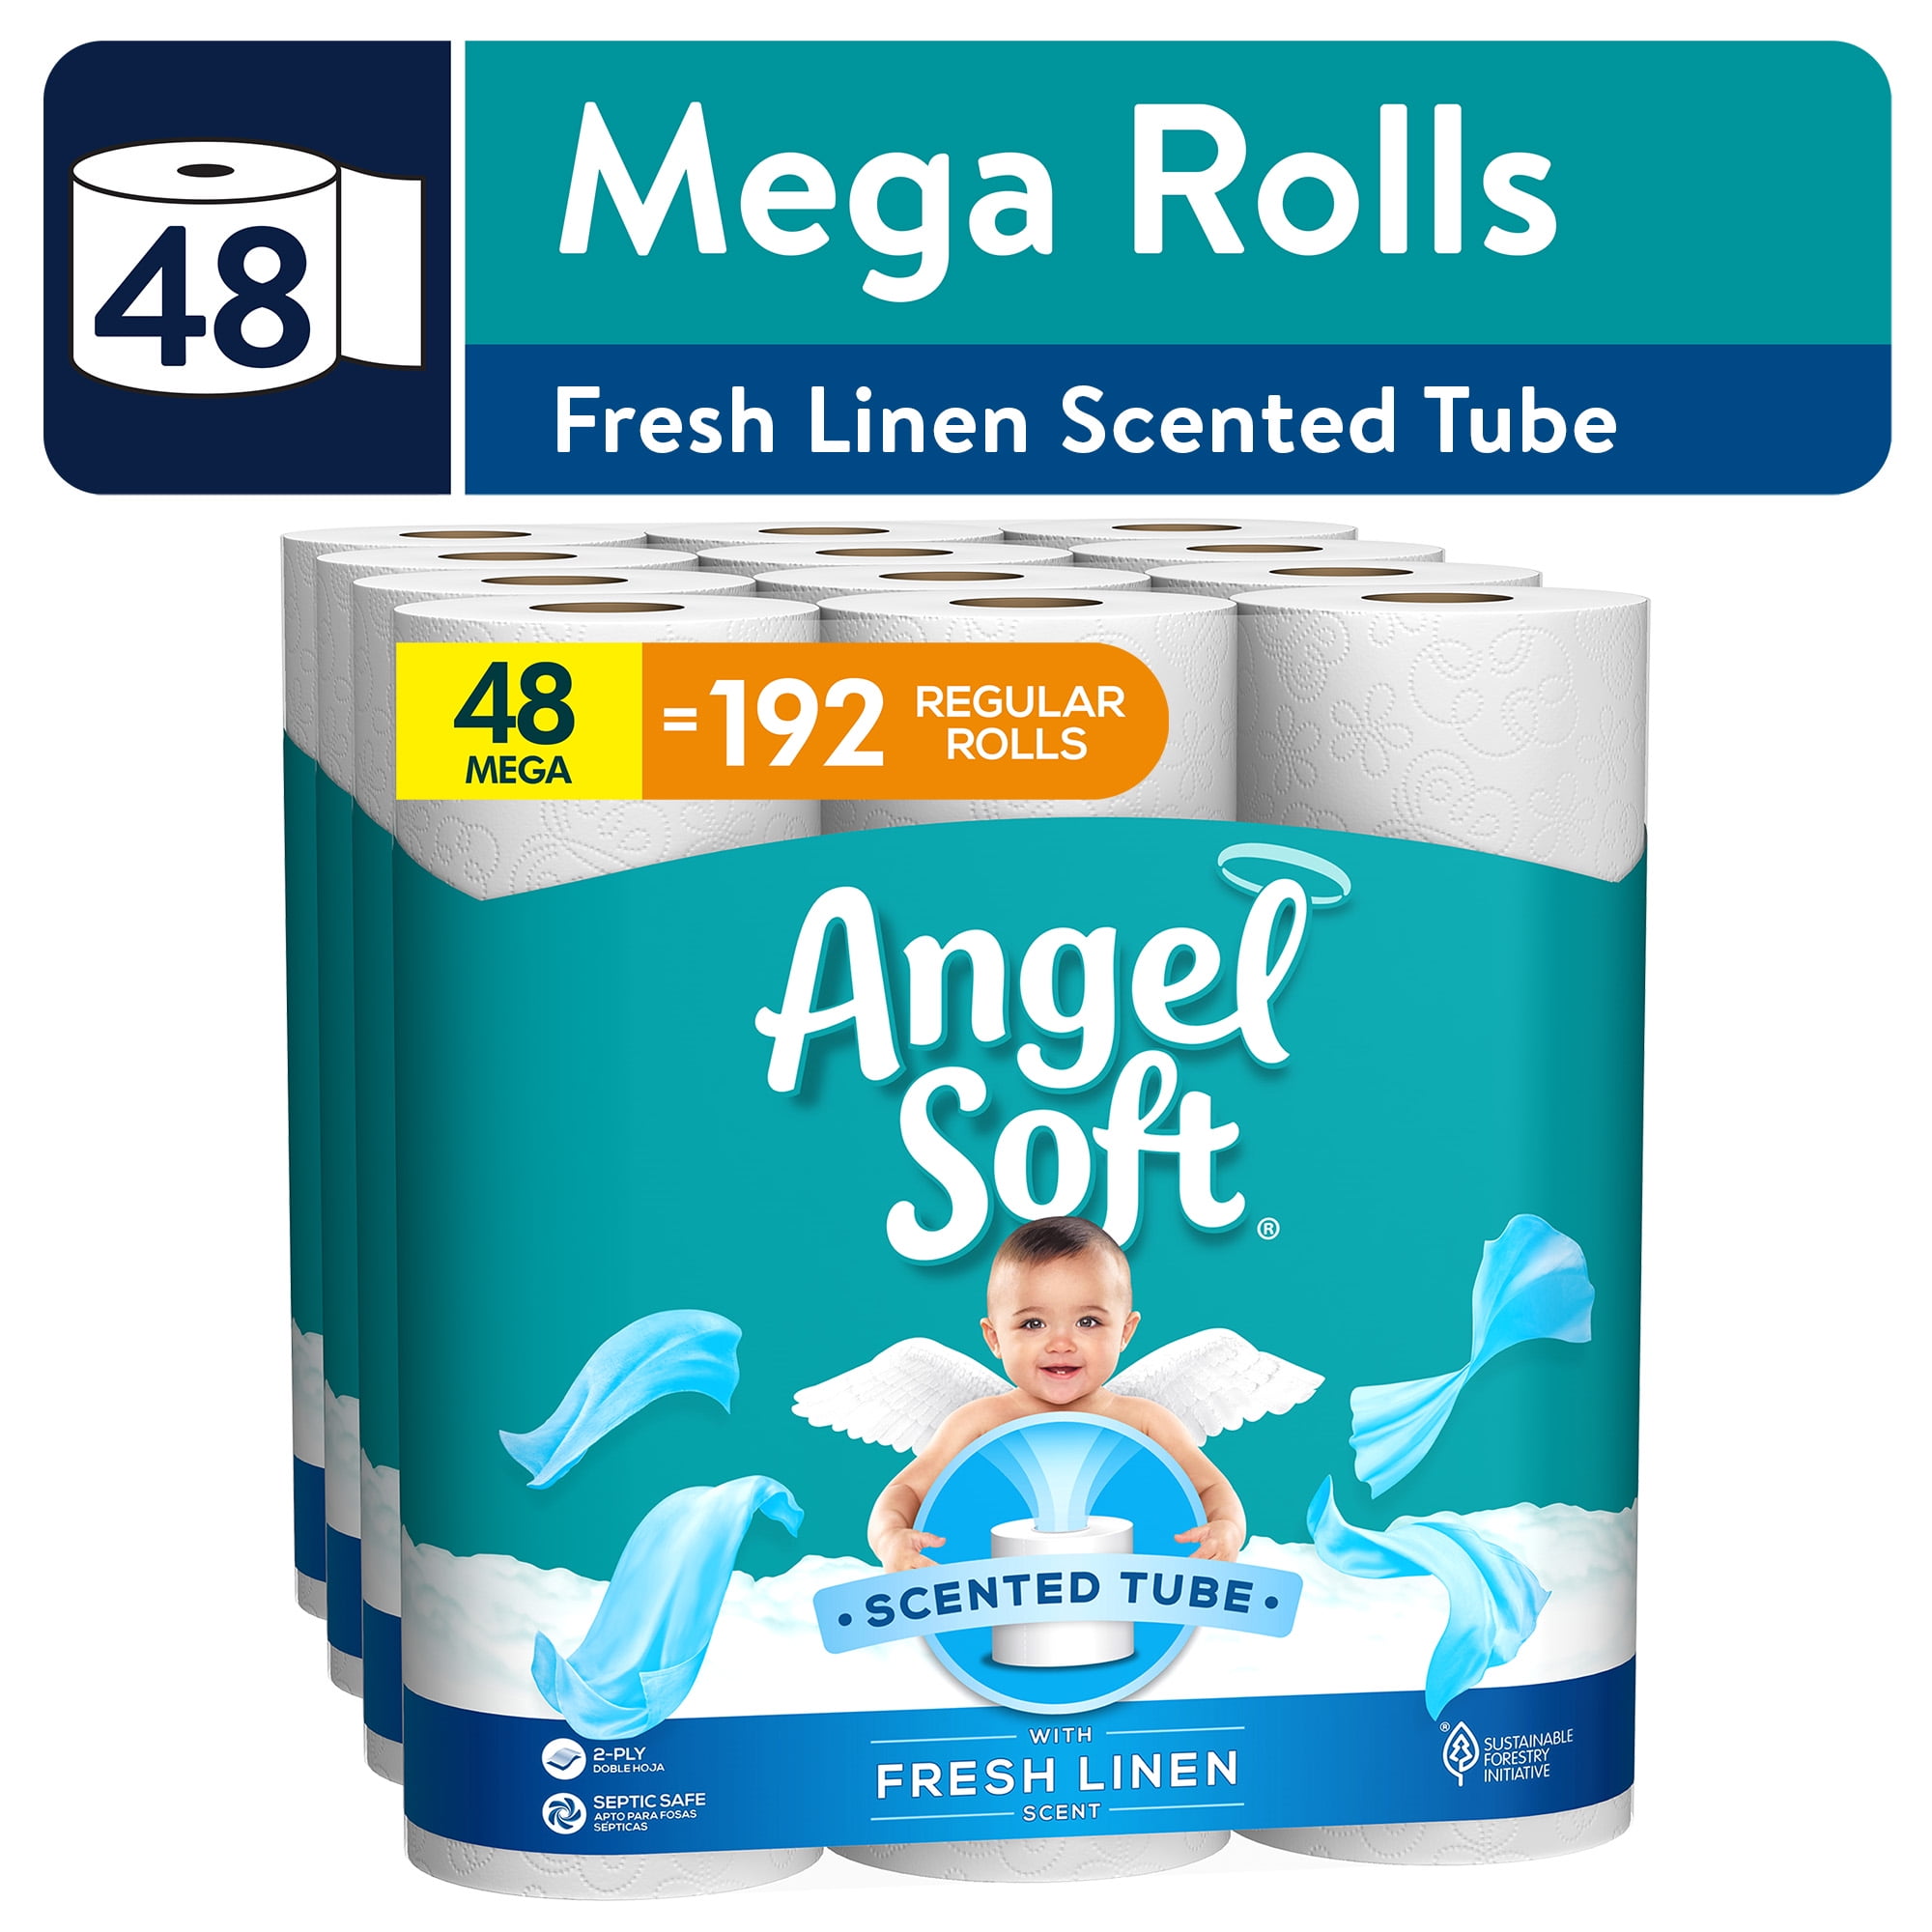 Angel Soft Toilet Paper with Fresh Linen Scented Tube, 48 Mega Rolls (4  Packs of 12 Rolls) 